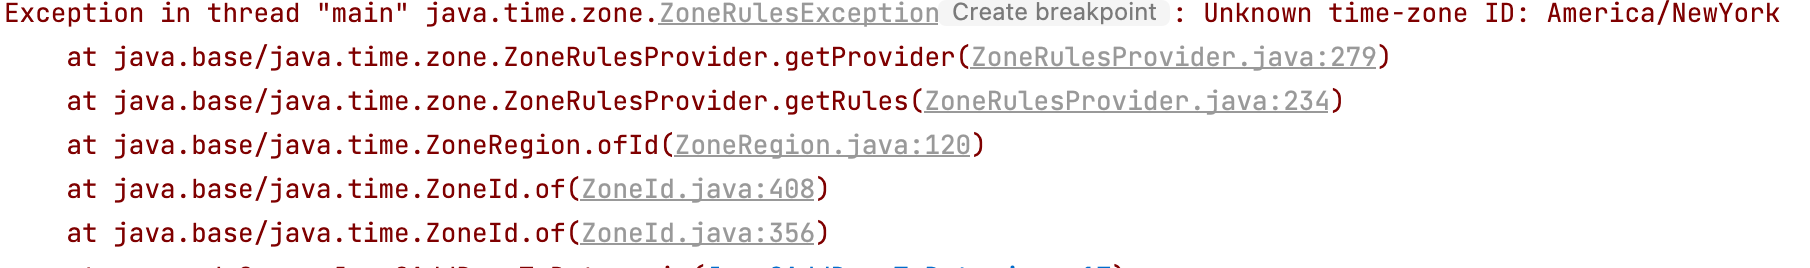 Java Unknown time-zone ID Error